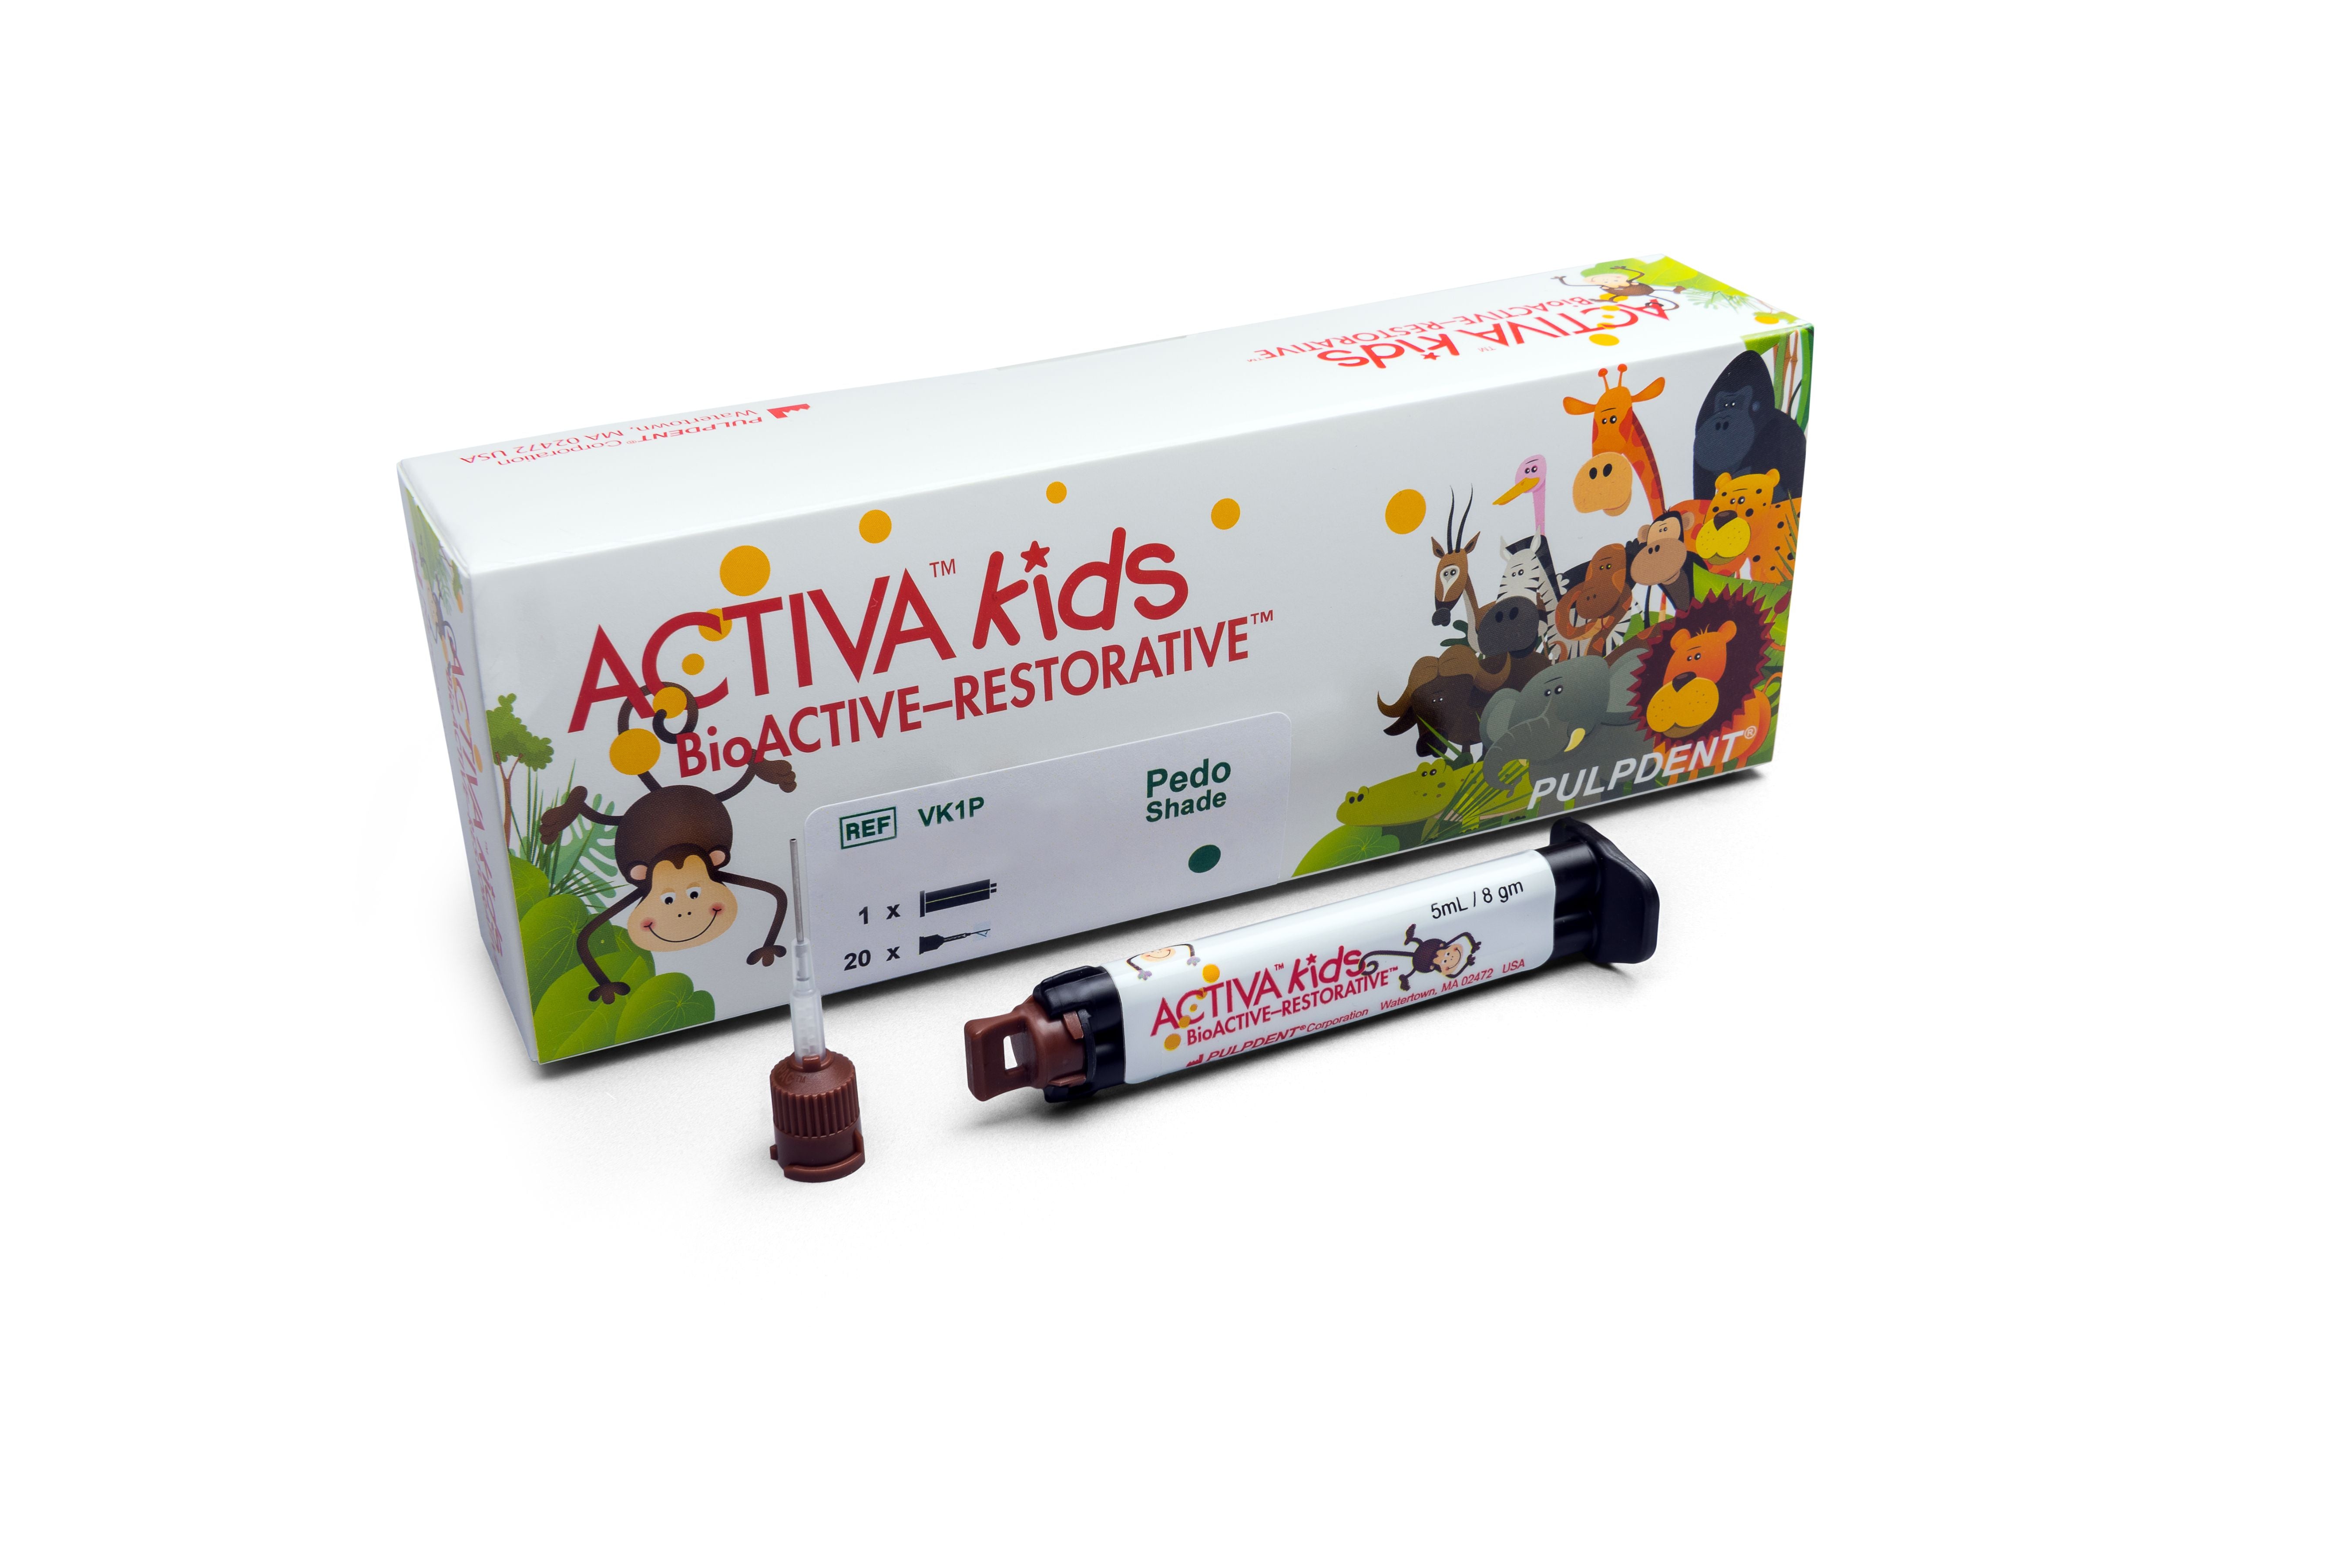 ACTIVA kids BioACTIVE Restorative